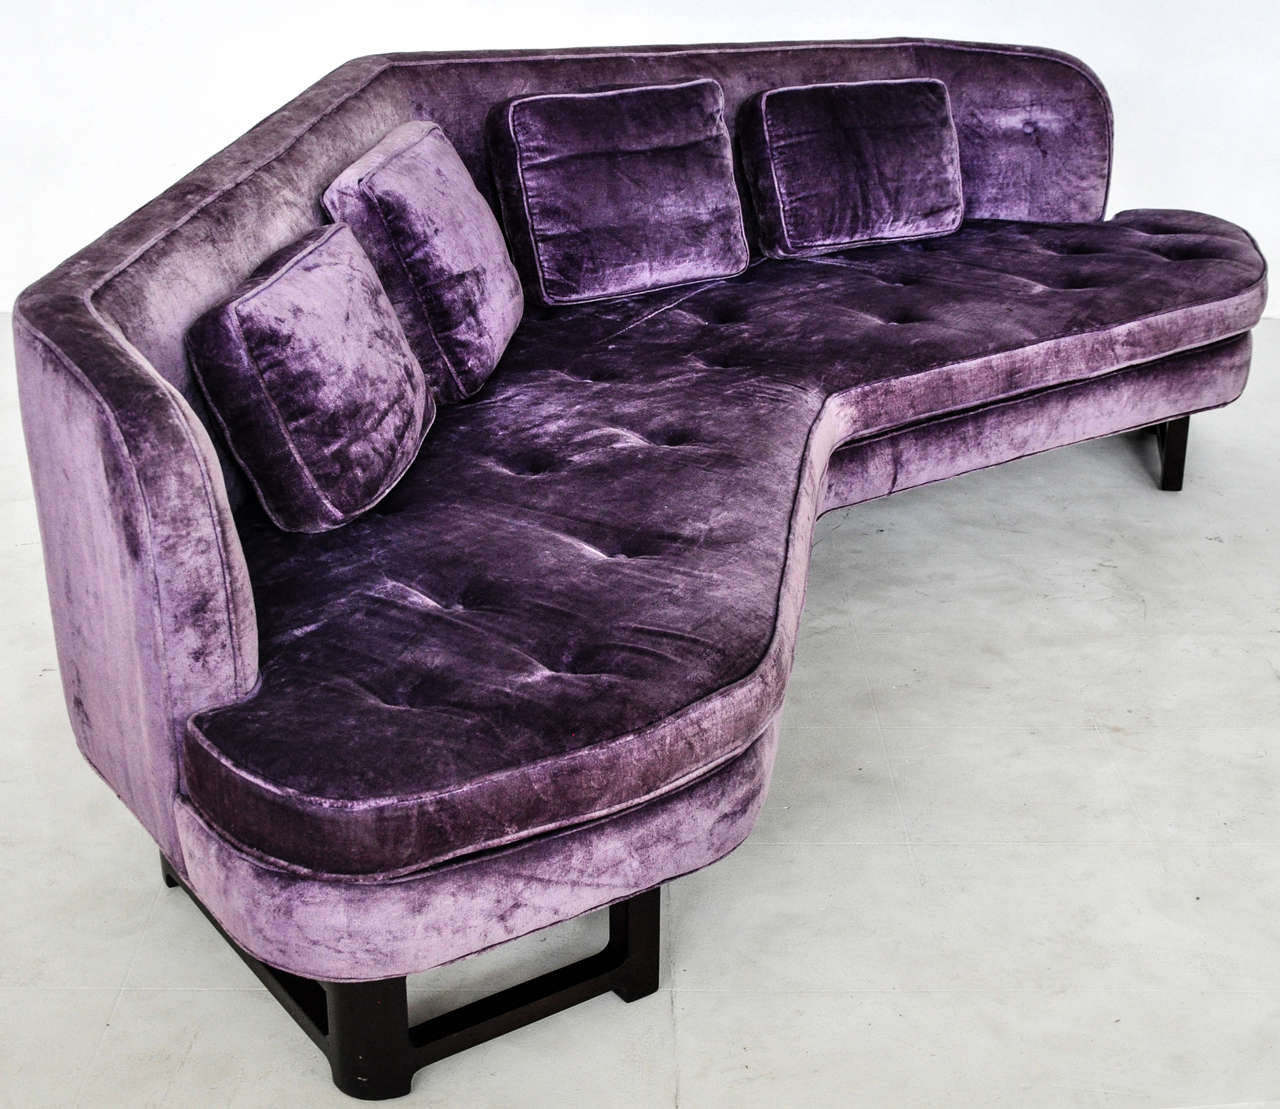 Wide angle sofa by Edward Wormley for Dunbar.  Large 8.5' long model.  Original velvet upholstery over dark mahogany frame.